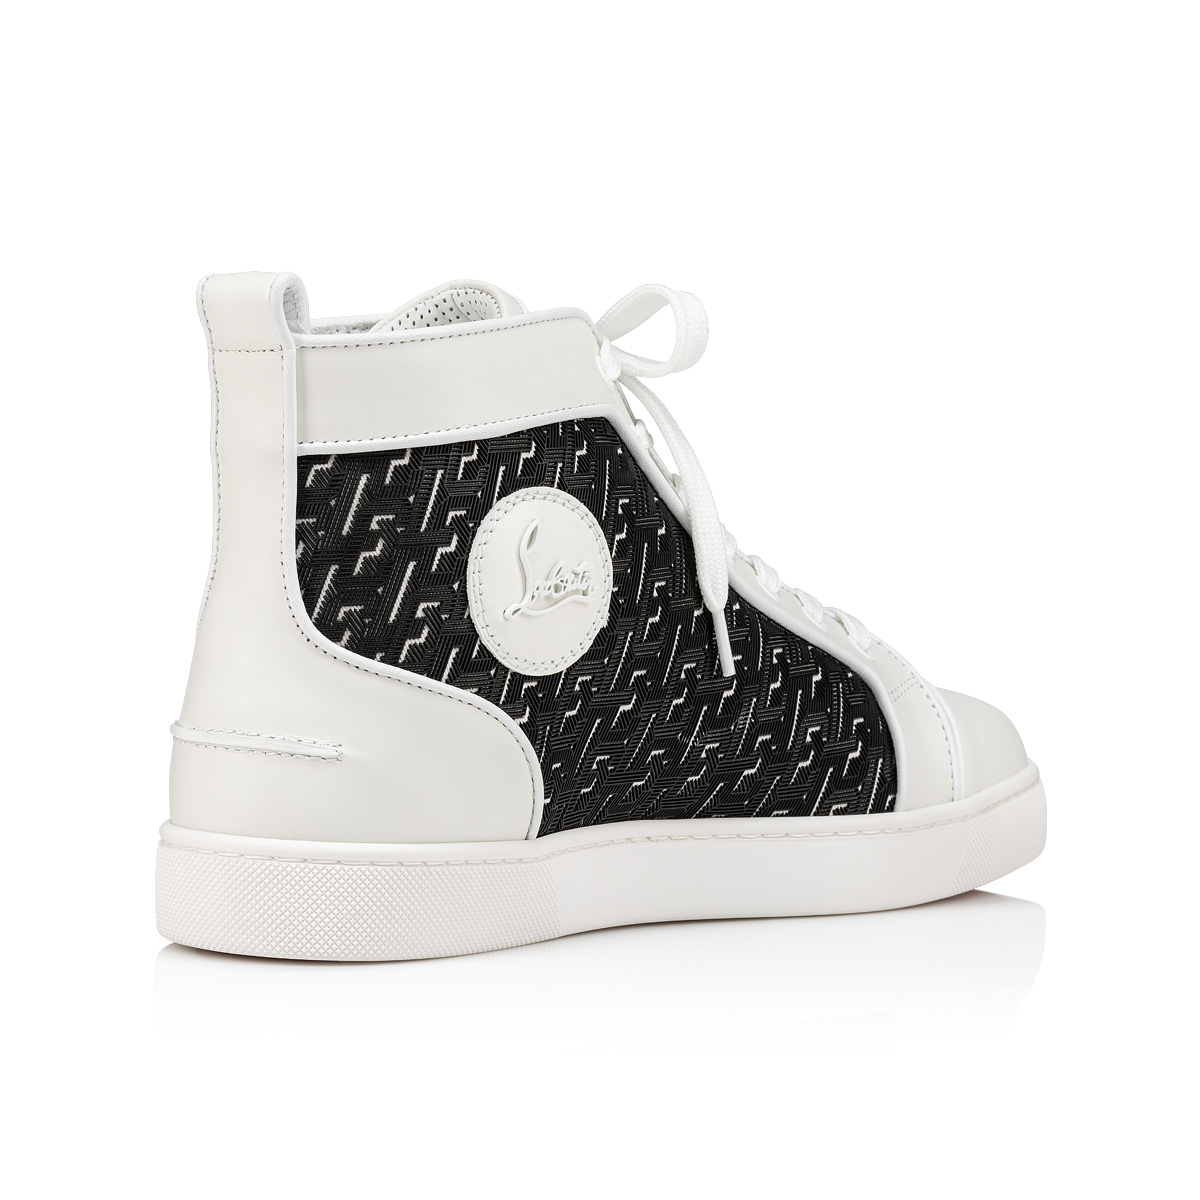 Louis Silk Satin Sneakers in White - Christian Louboutin